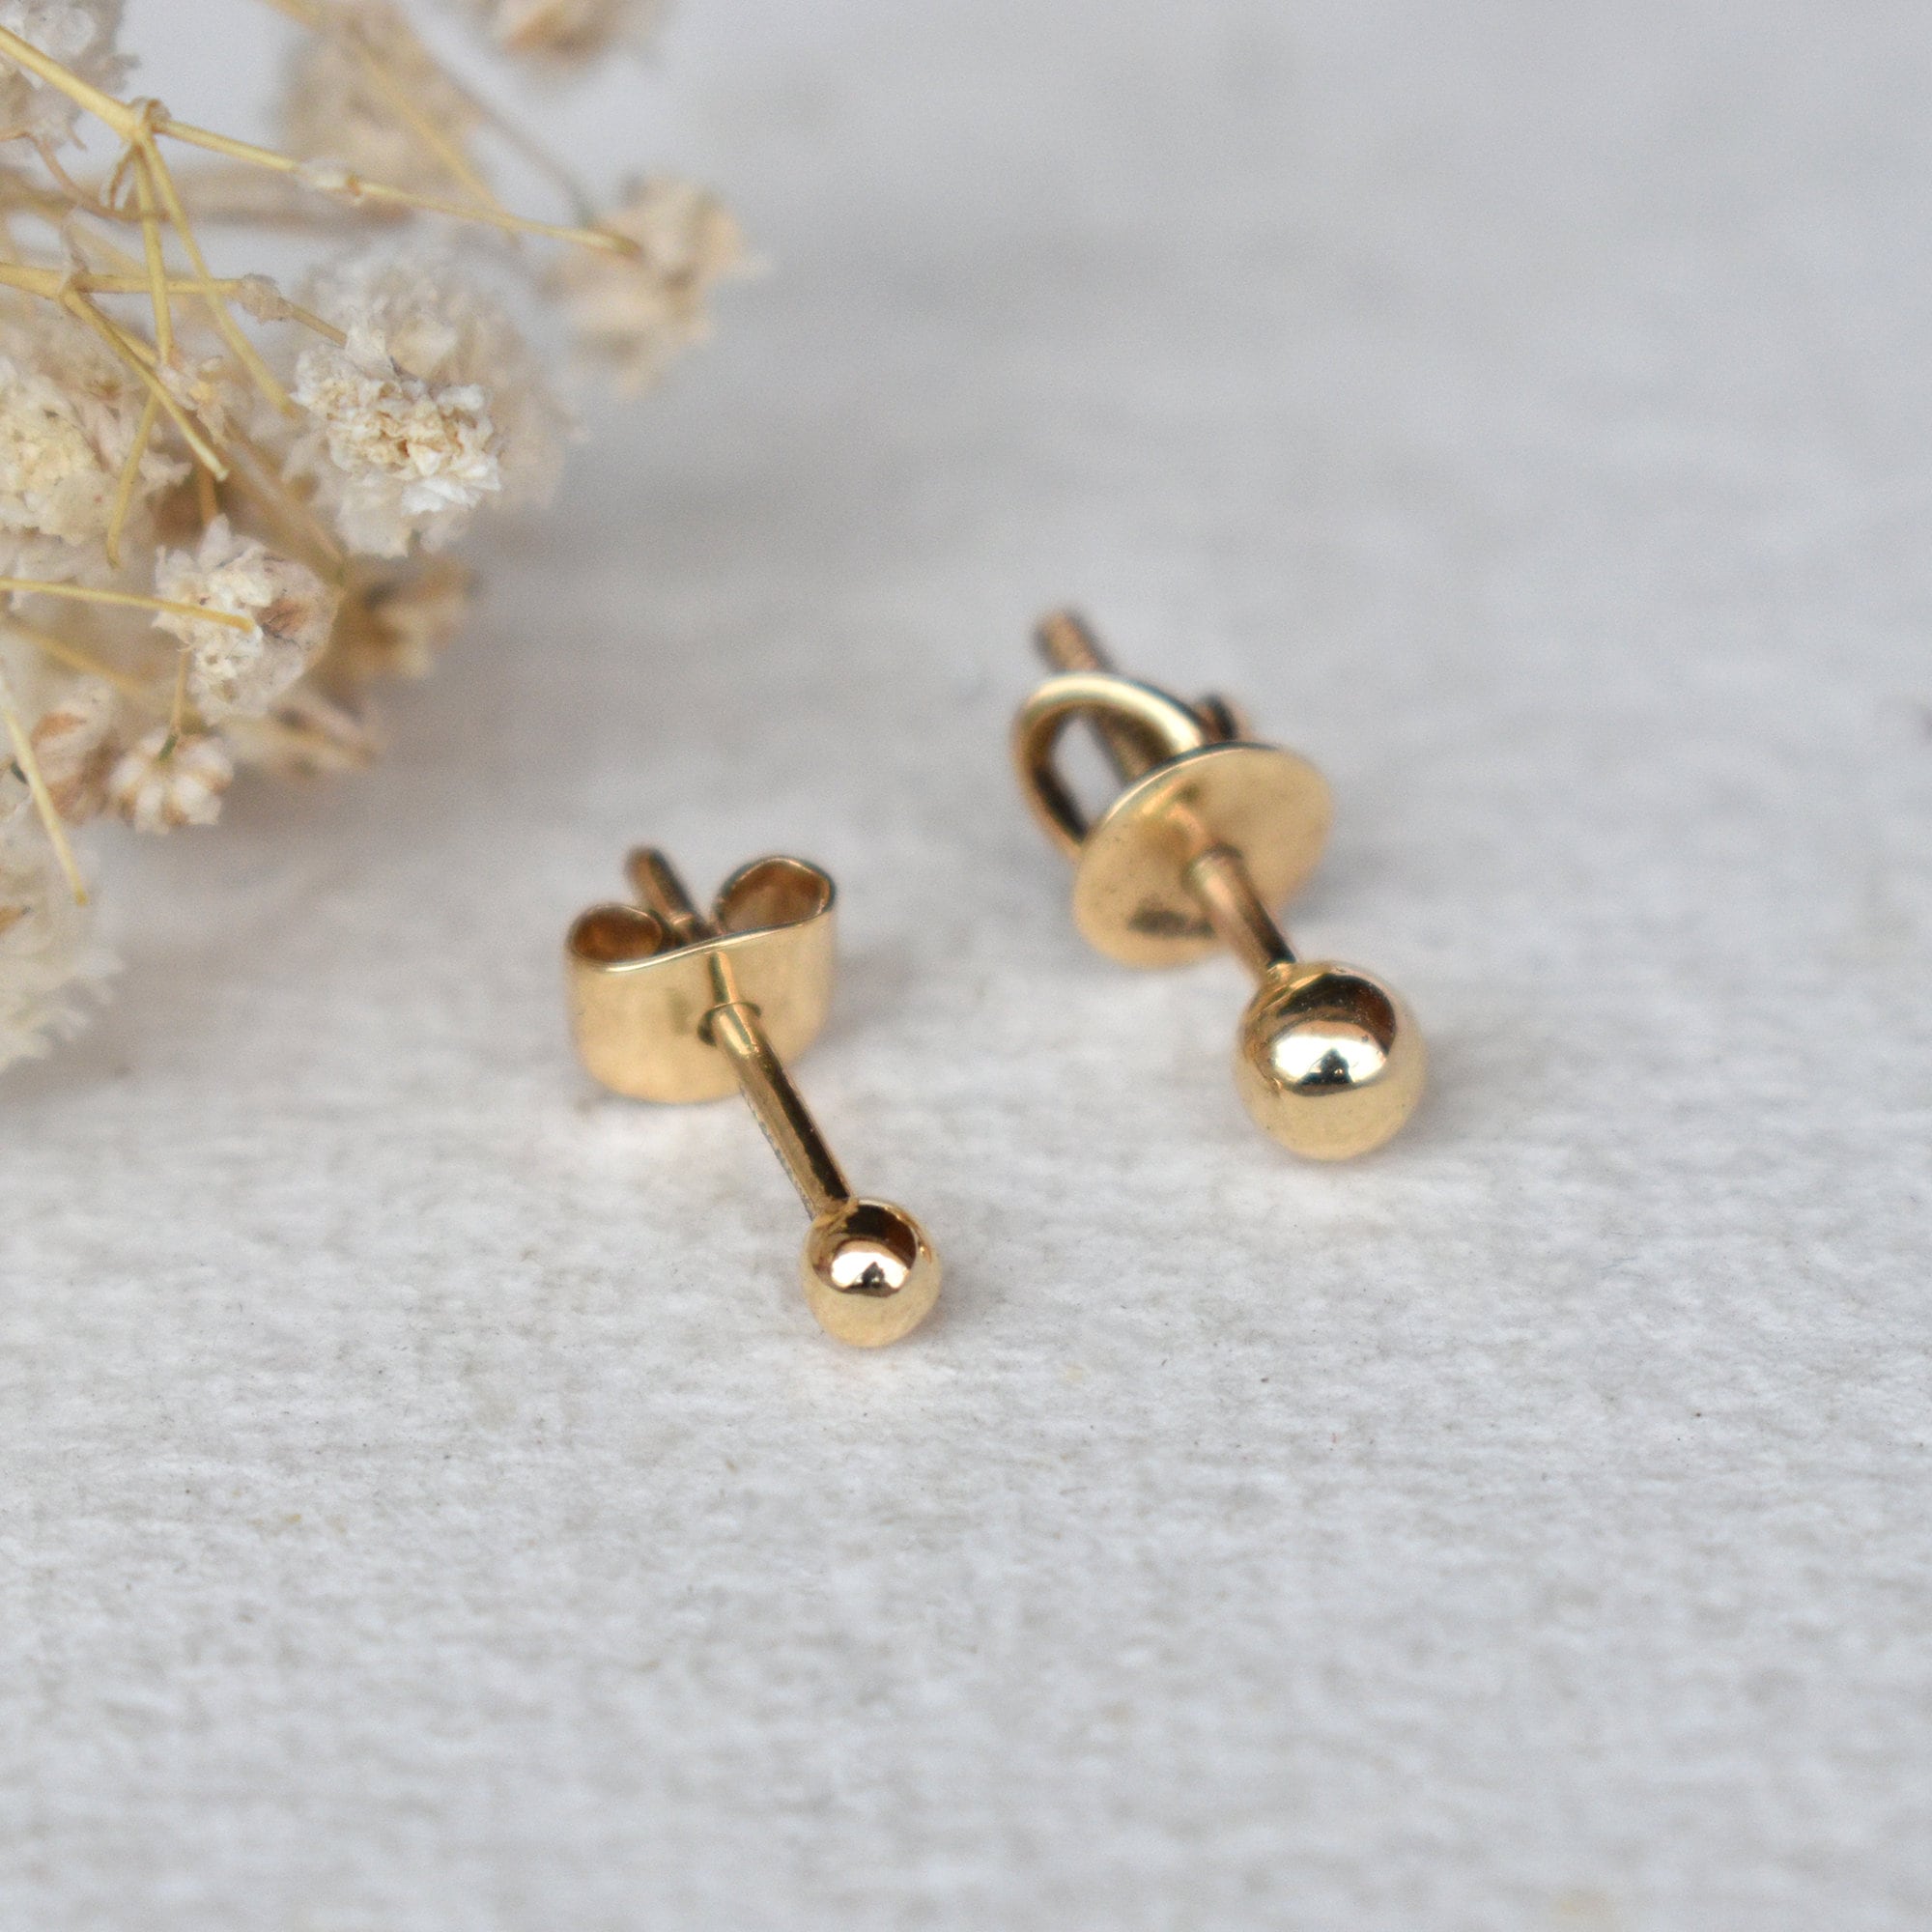 3mm Ball Stud Piercing Earrings in 14K Solid Gold - Short Post